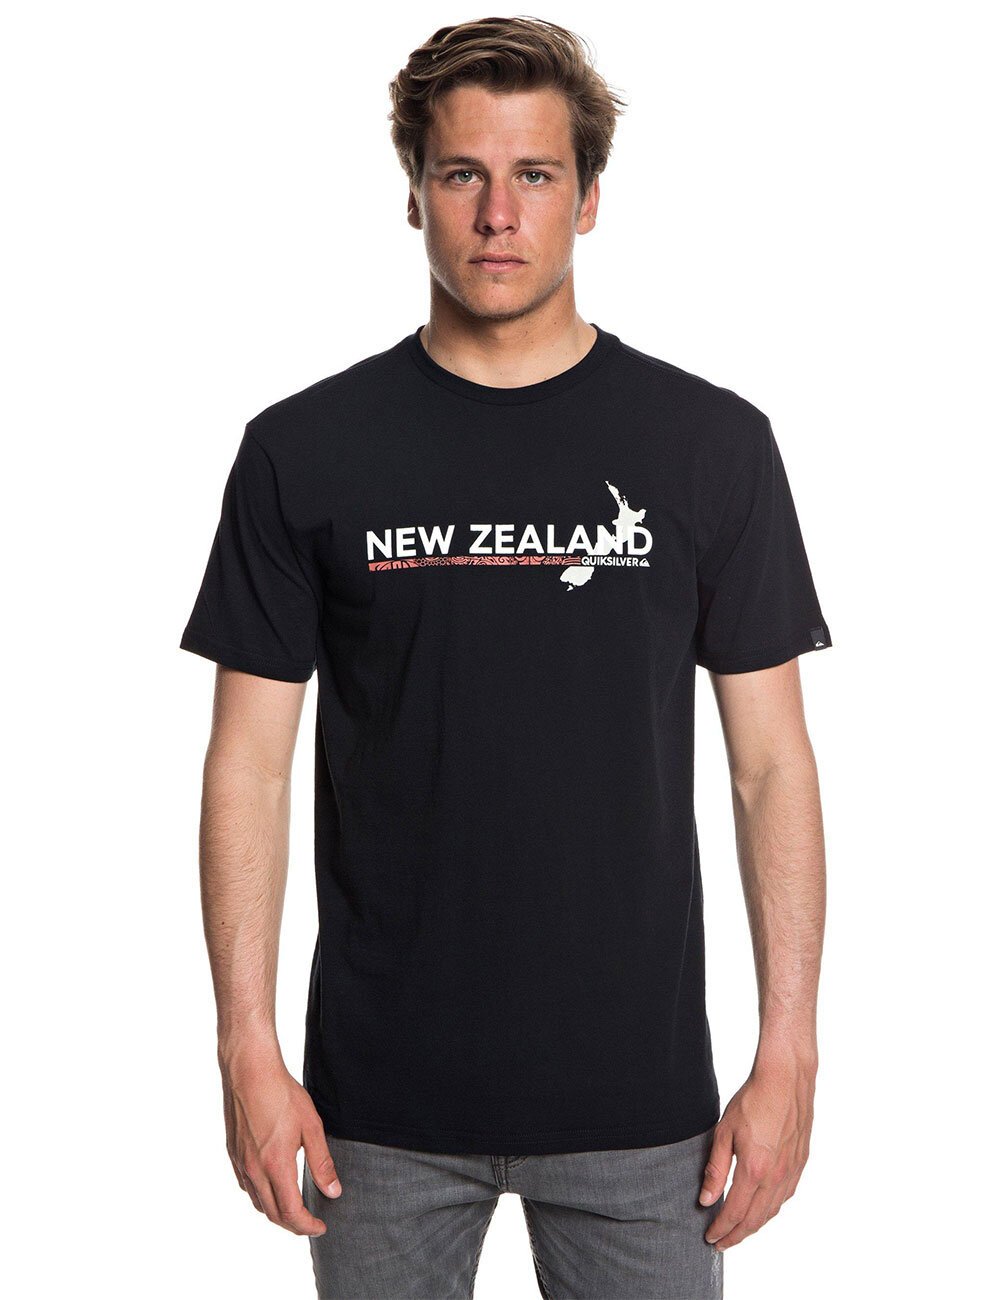 NEW ZEALAND TEE - Shop All Men's Tops - Tees, Hoodies, Crews, Jackets ...